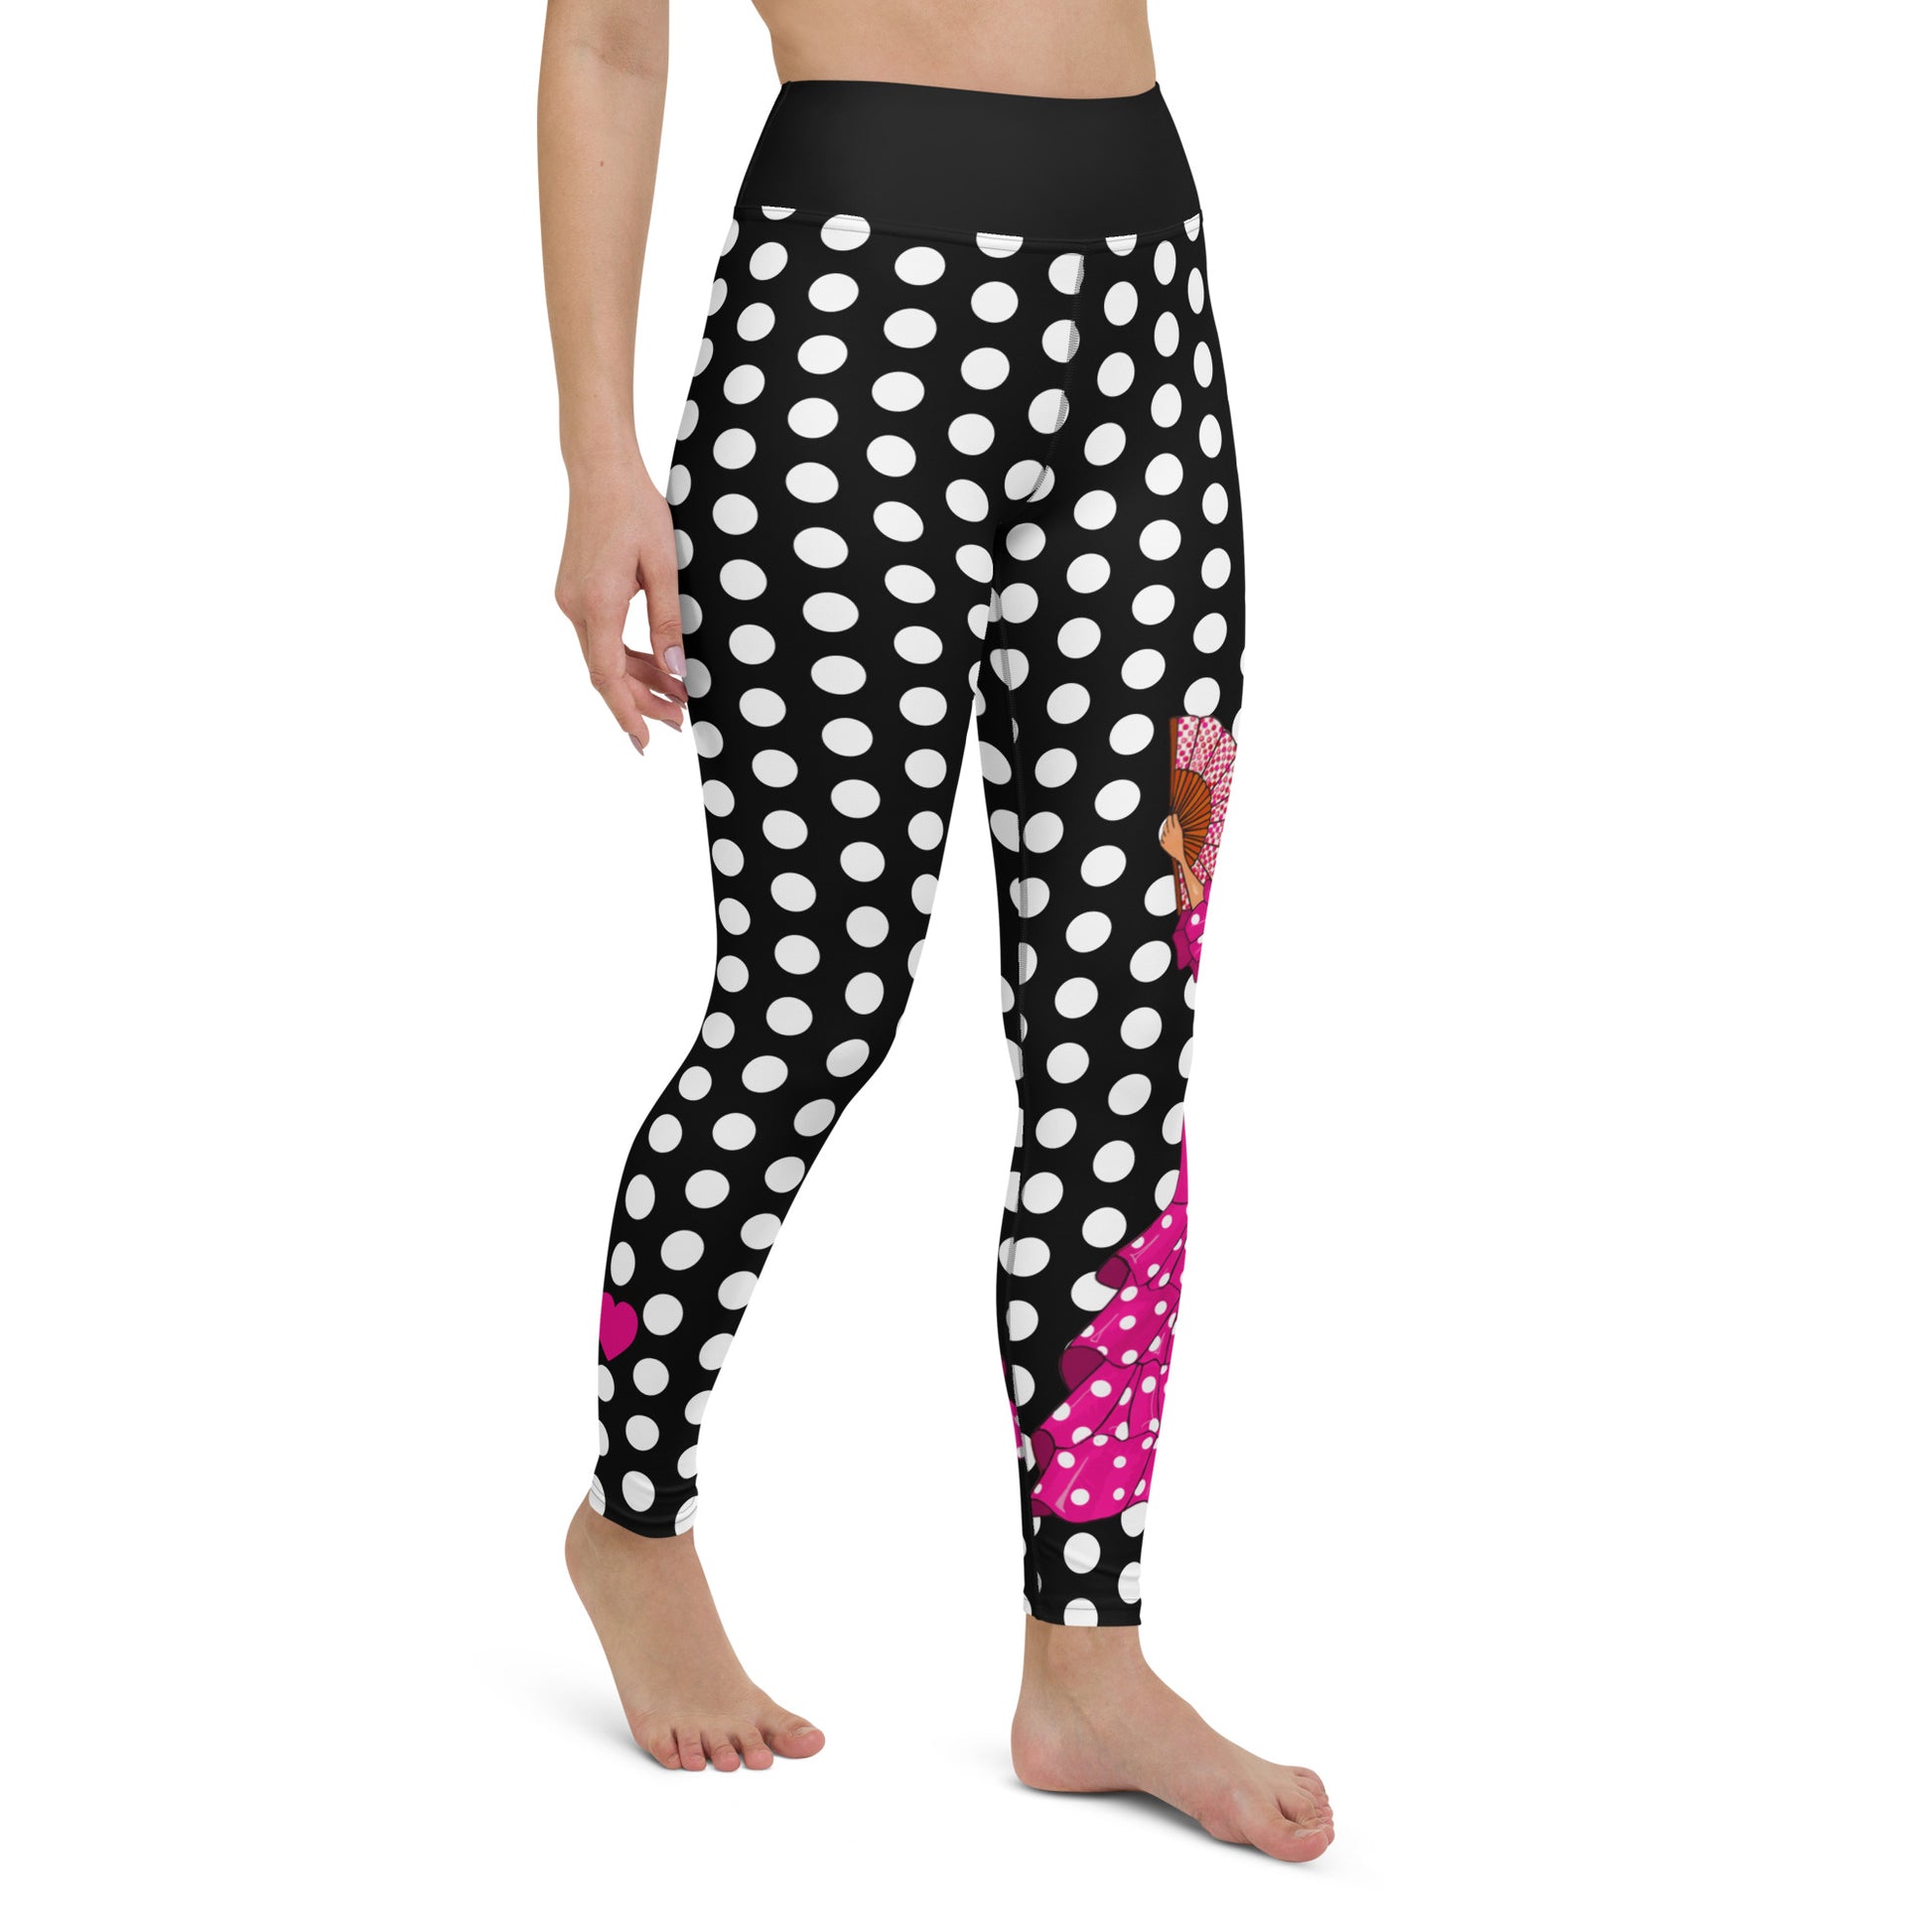 a woman in black and white polka dot print leggings